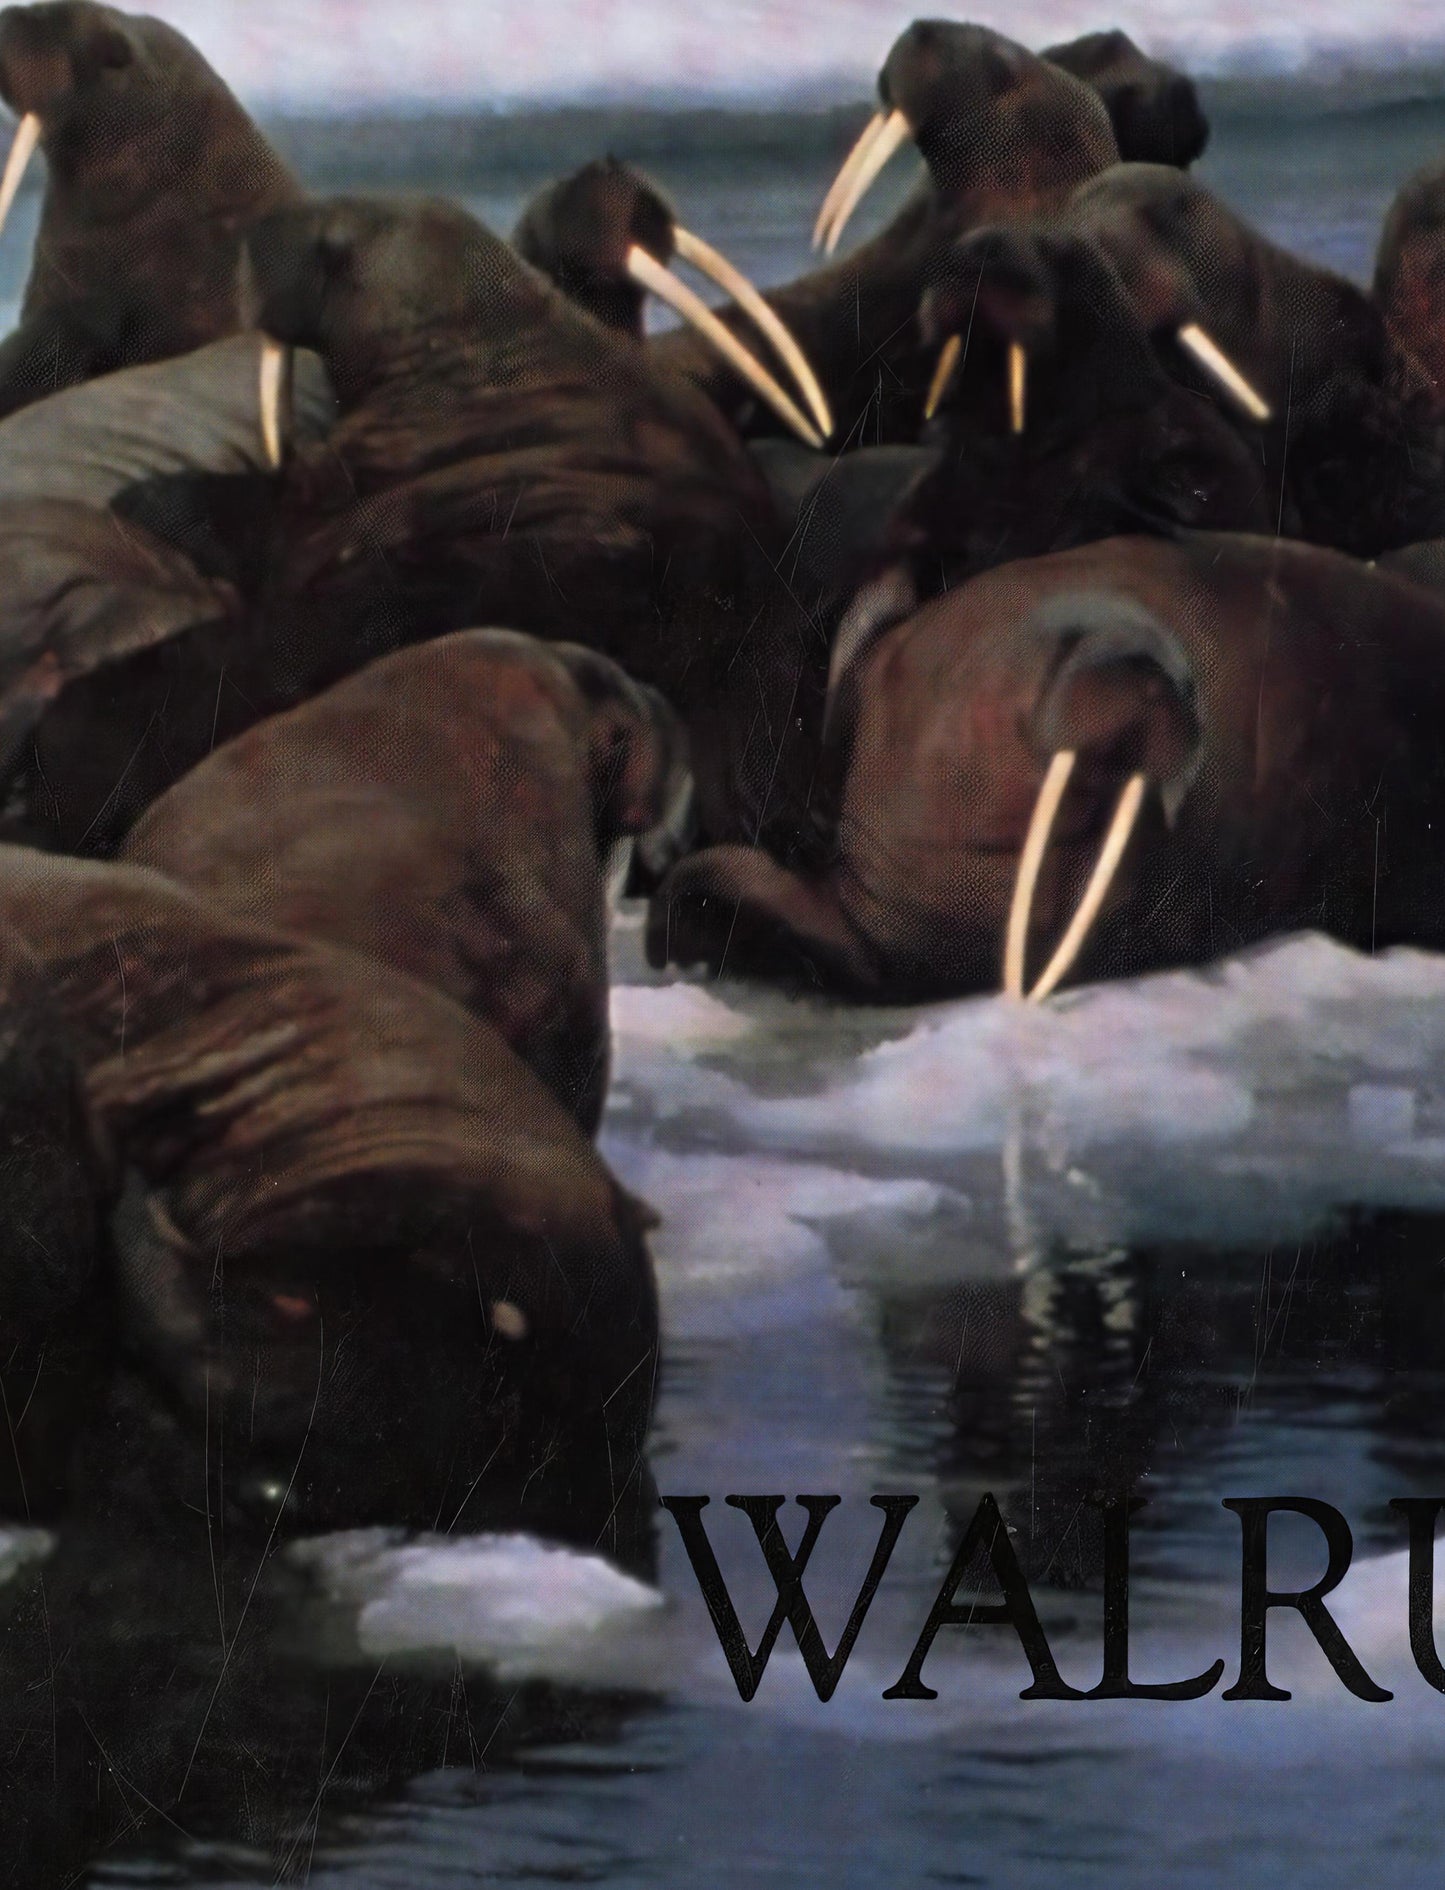 Walrus 1985 Catalogue Poster